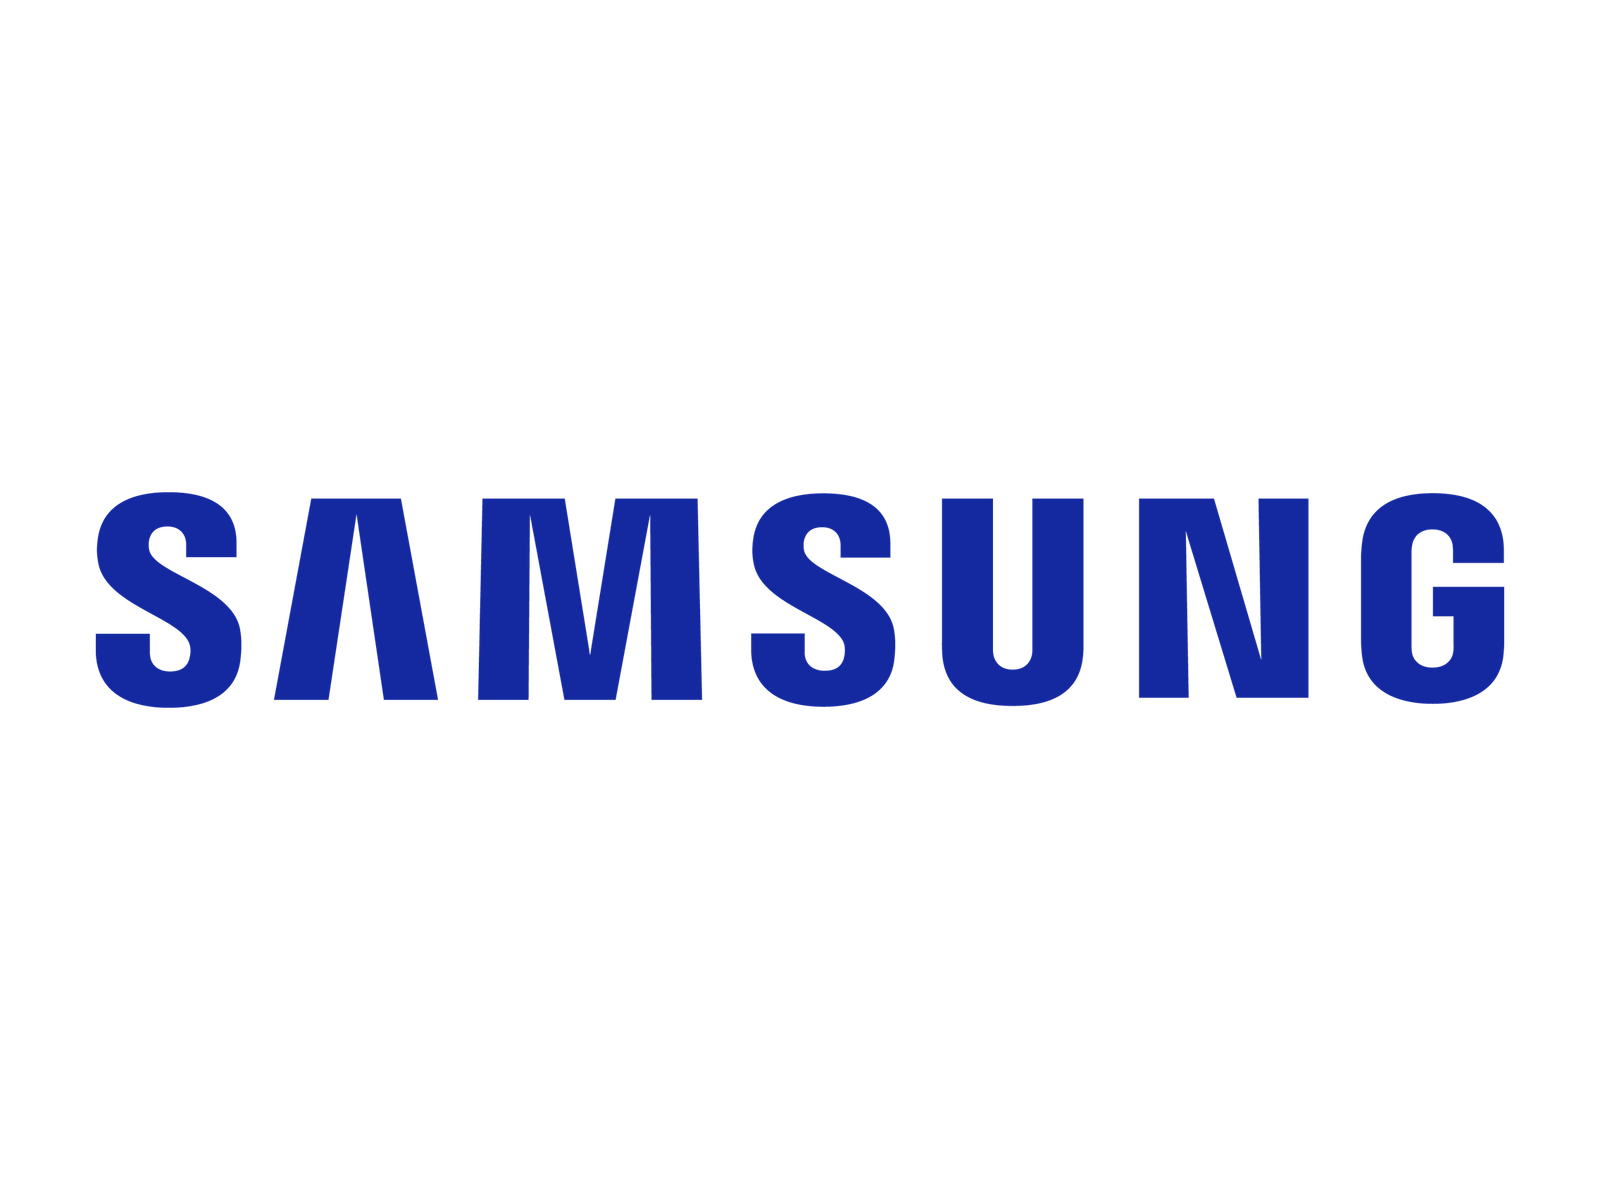 samsung-logo-text